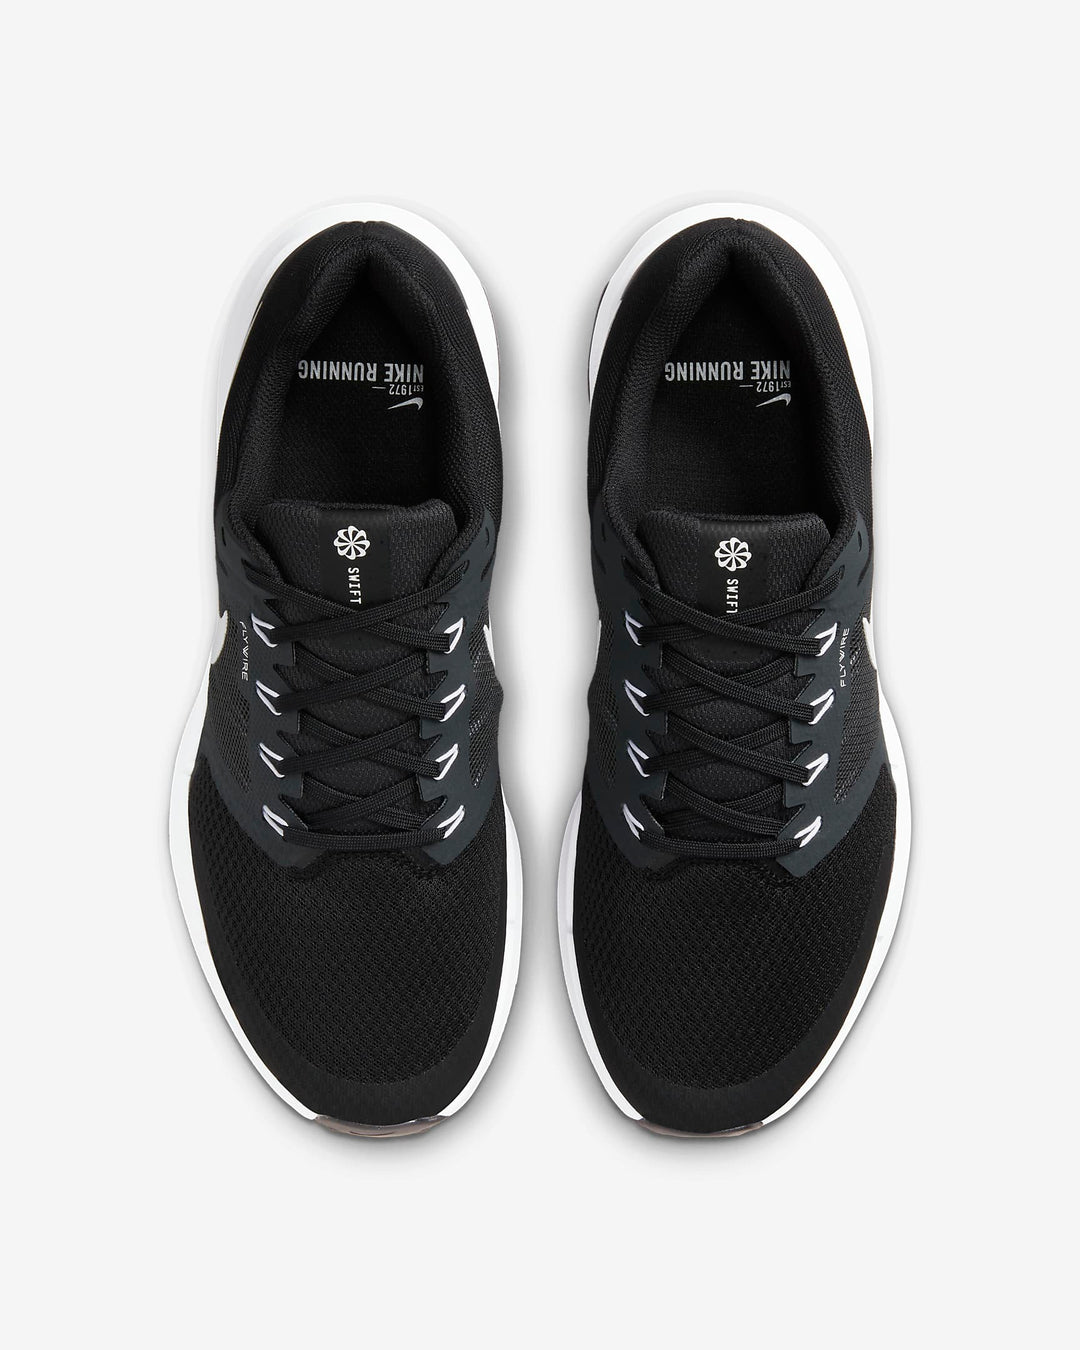 Giày Nike Run Swift 3 Men Road Running Shoes #Black - Kallos Vietnam